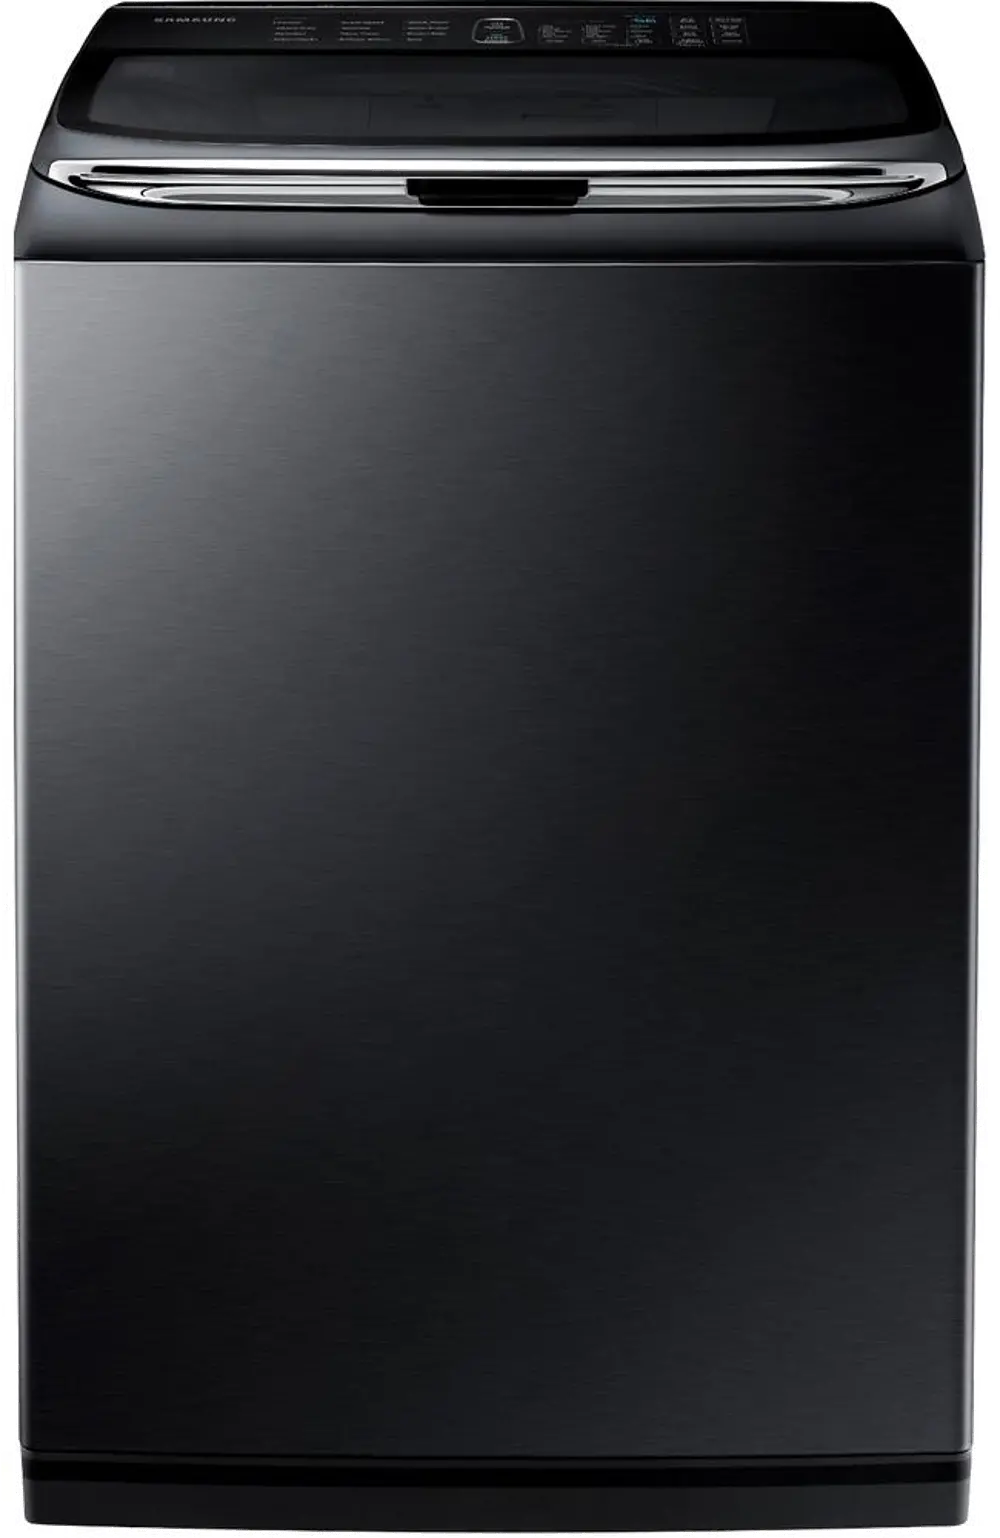 WA50K8600AV Samsung Black Stainless Steel Top Load Washer-1